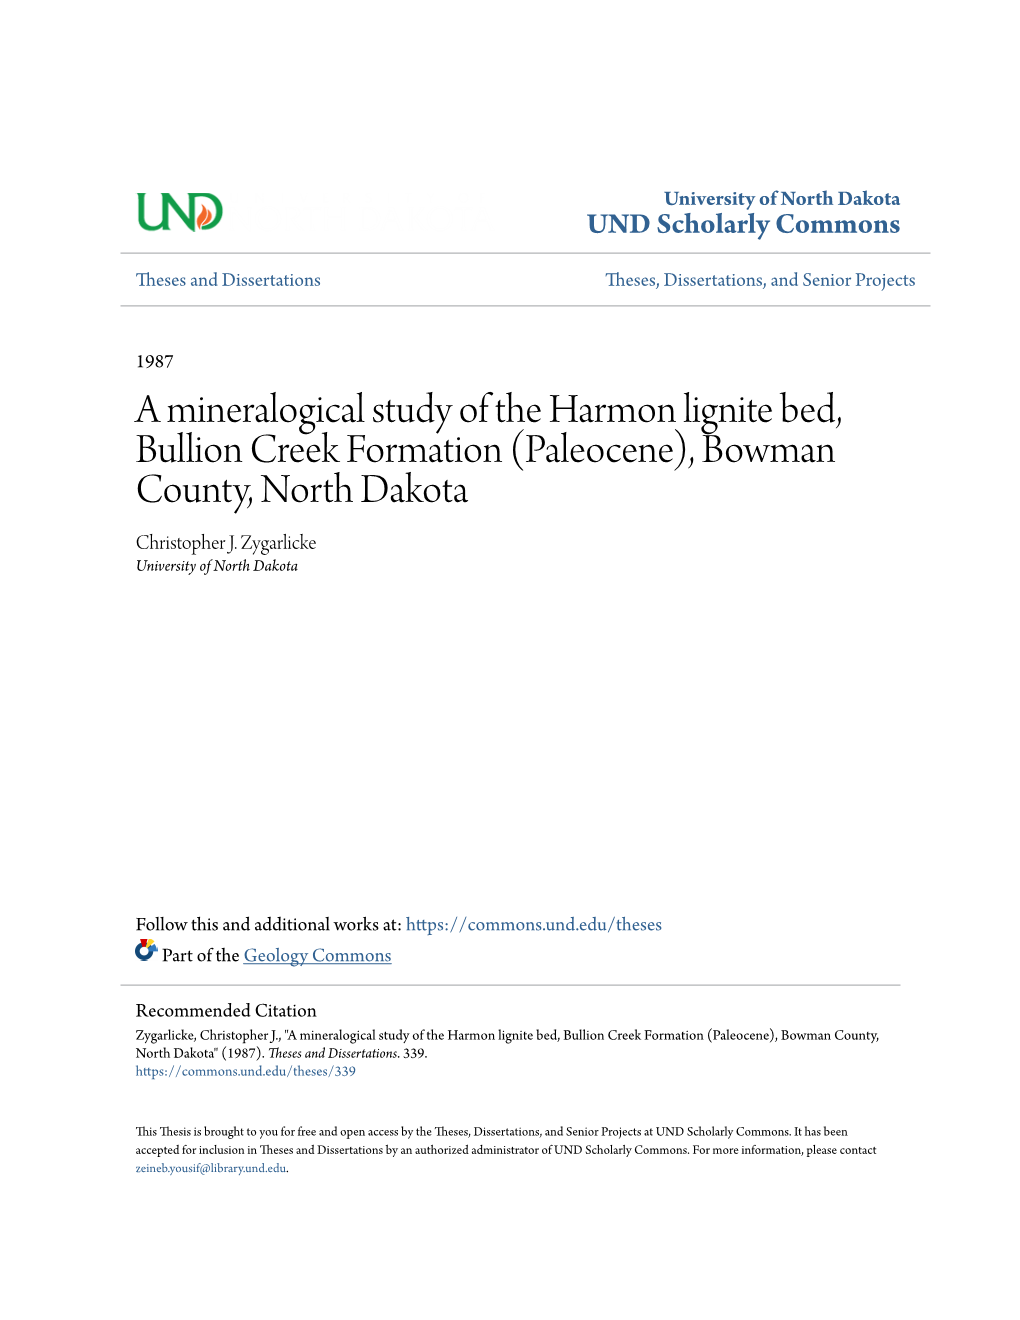 A Mineralogical Study of the Harmon Lignite Bed, Bullion Creek Formation (Paleocene), Bowman County, North Dakota Christopher J